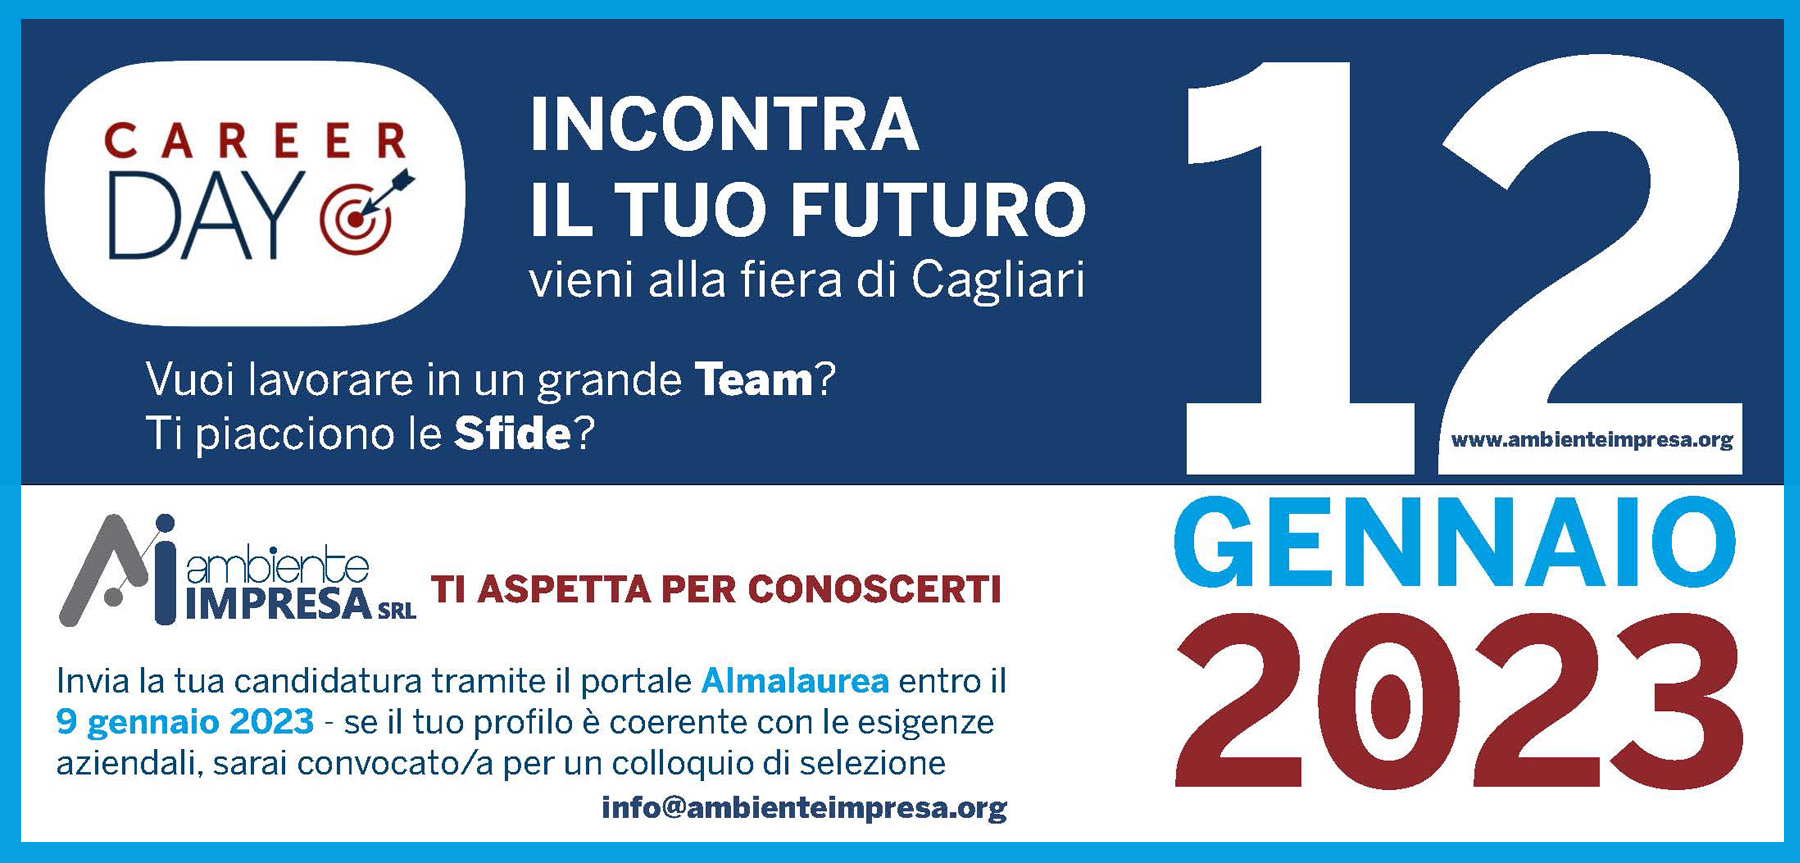 Career Day 2023 - Job - Lavora con Noi - Ambiente Impresa srl - Cagliari